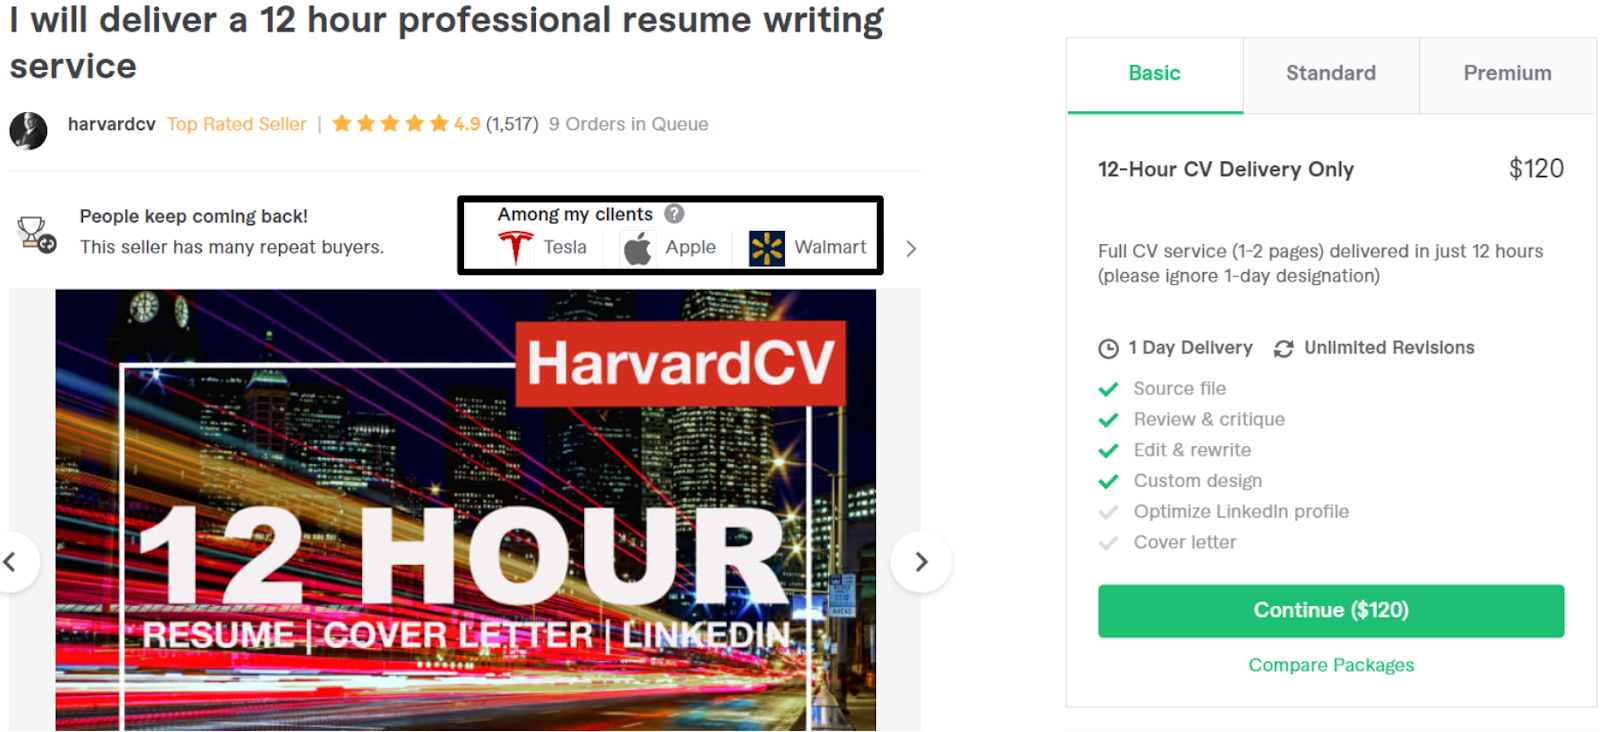 Harvardcv's resume writing service gig on Fiverr